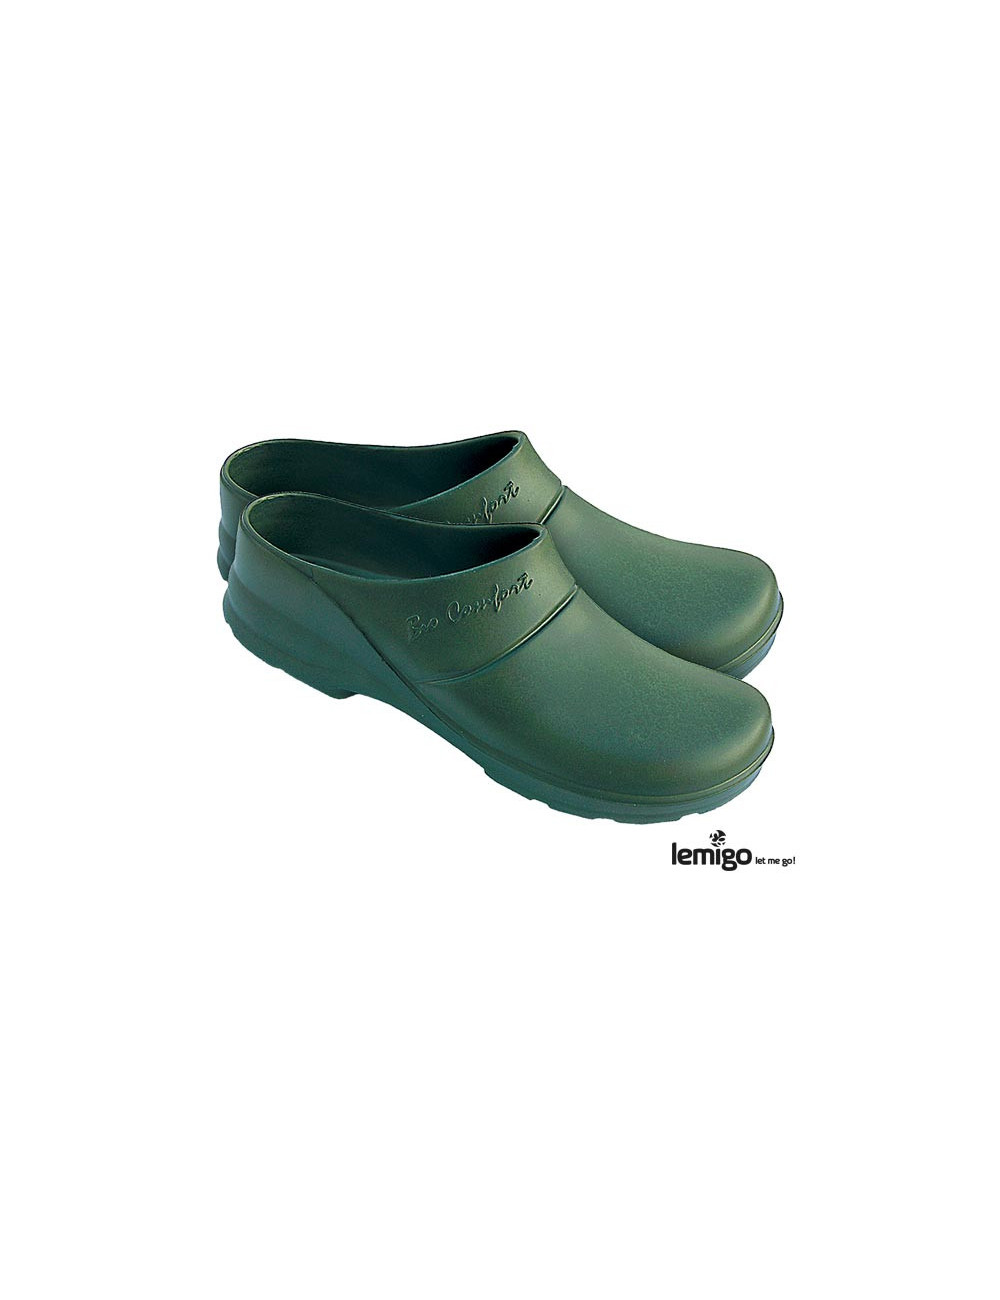 blbiocomfort Flip-Flops mit grünem Lemigo